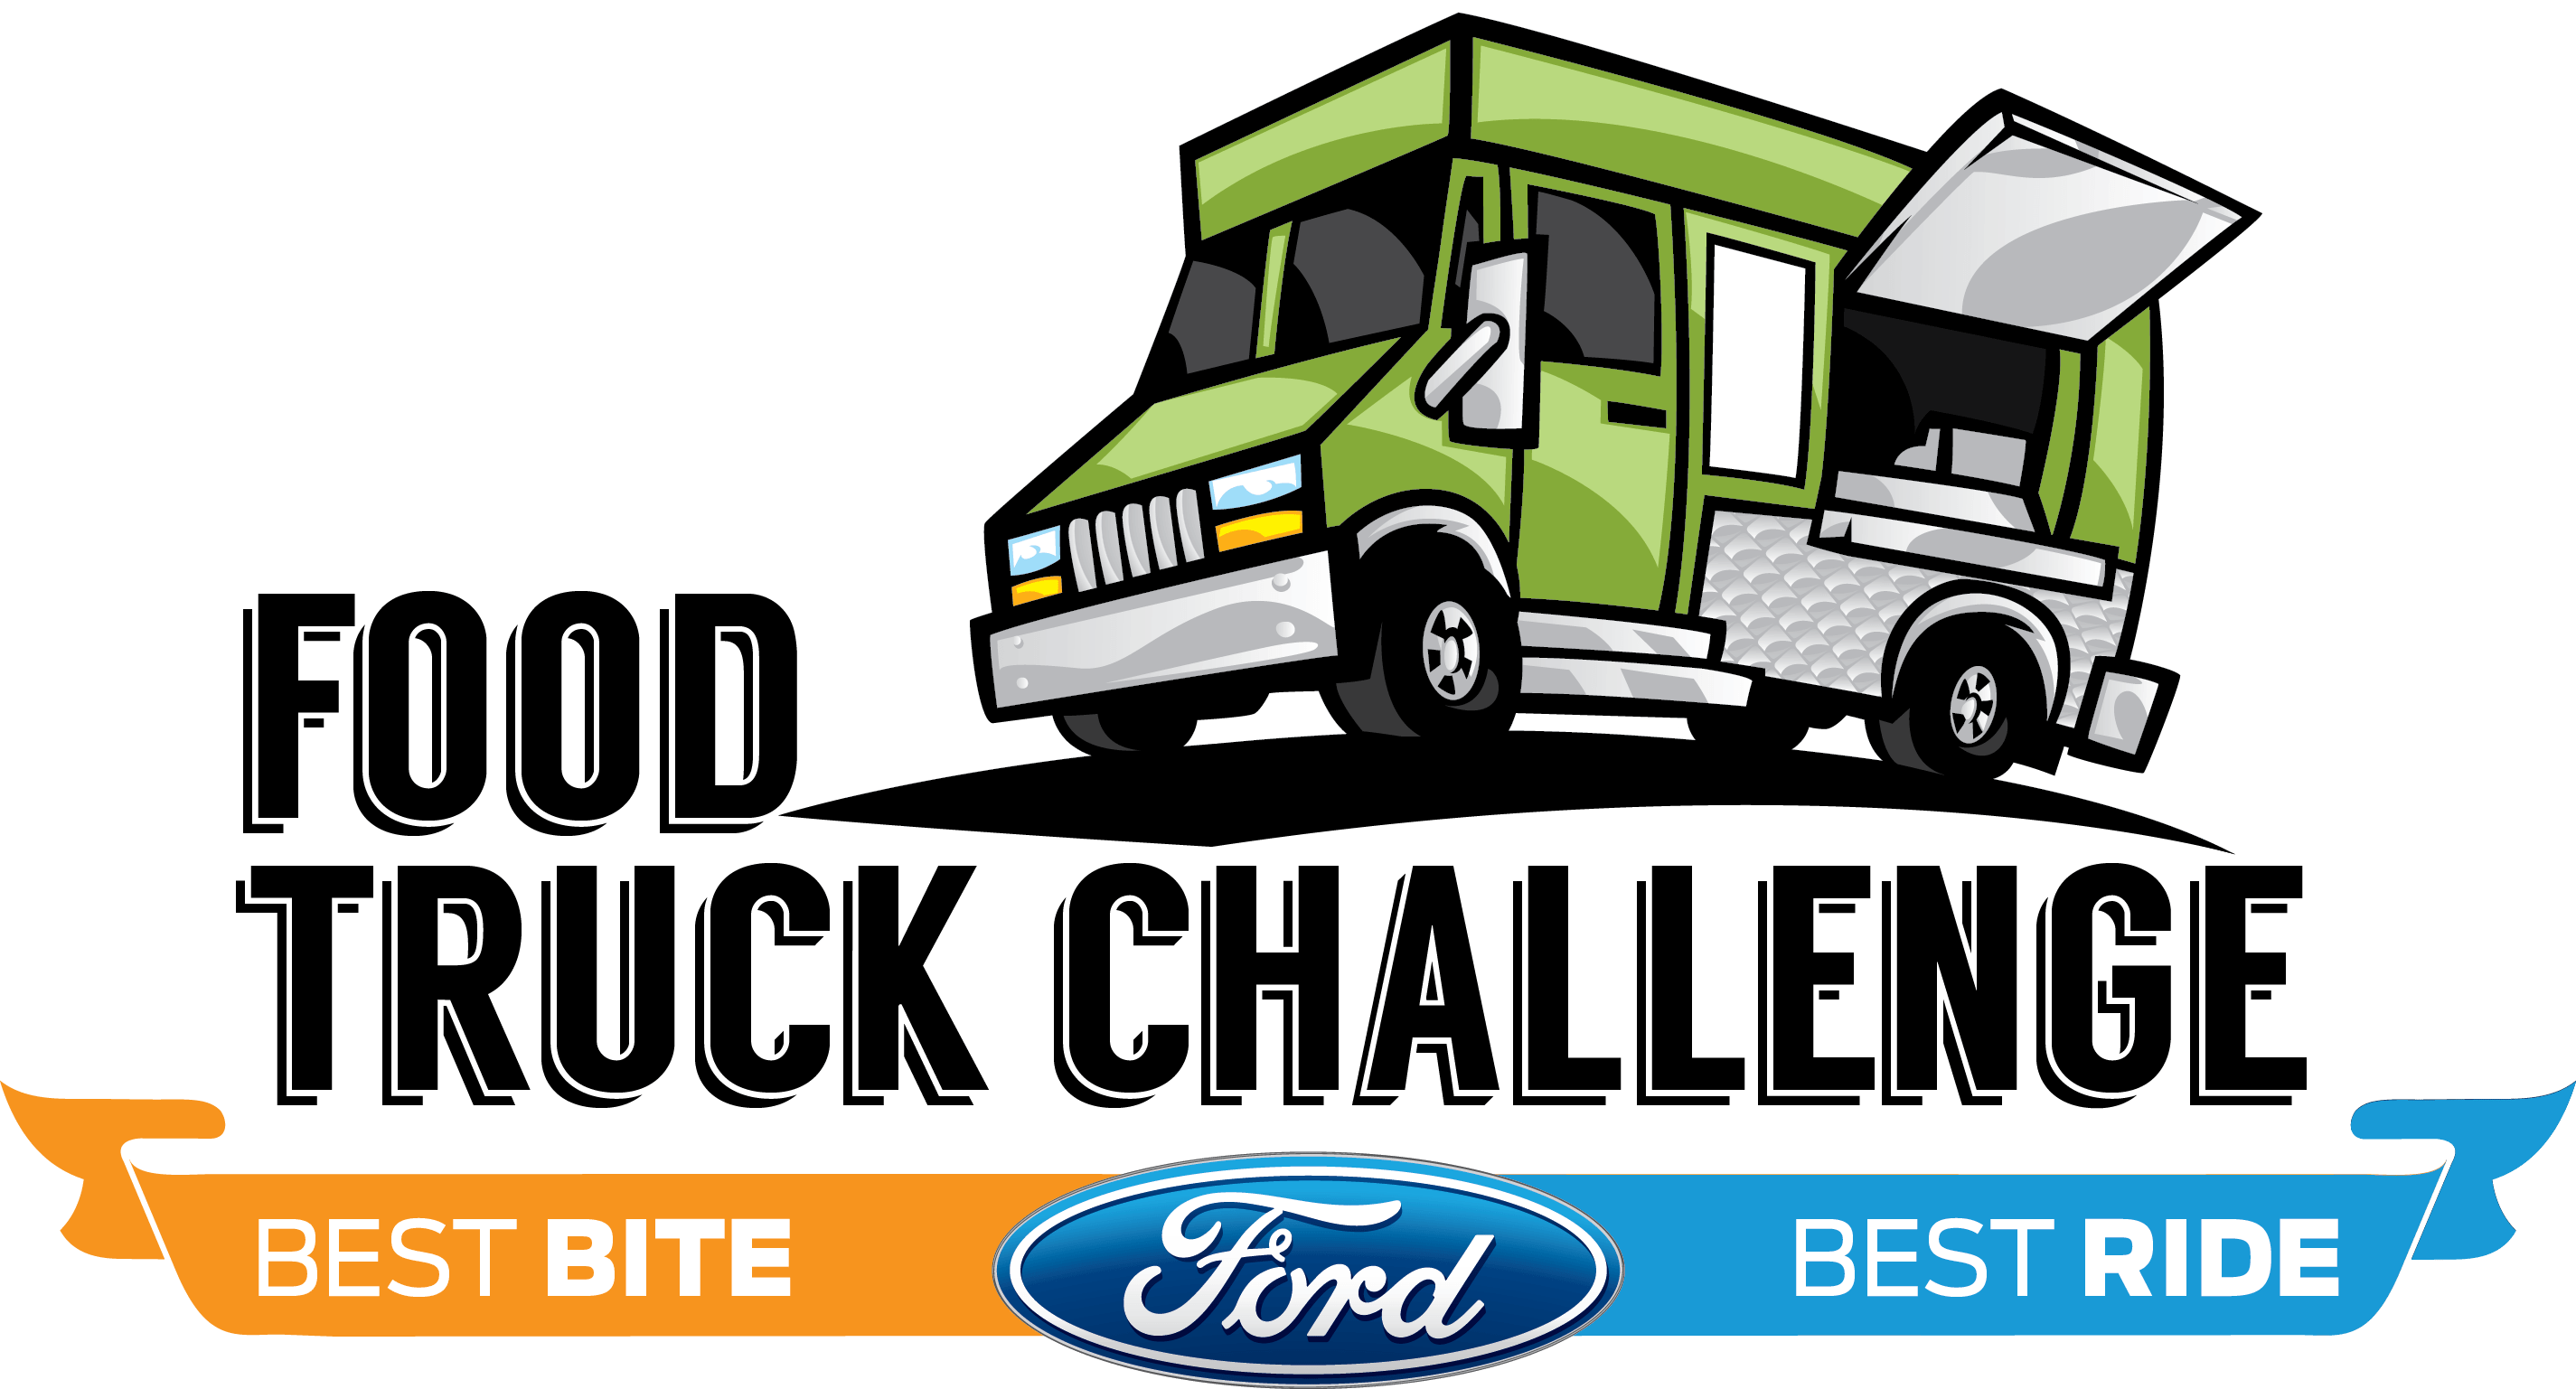 Food Truck Company Logo - Food truck Logos